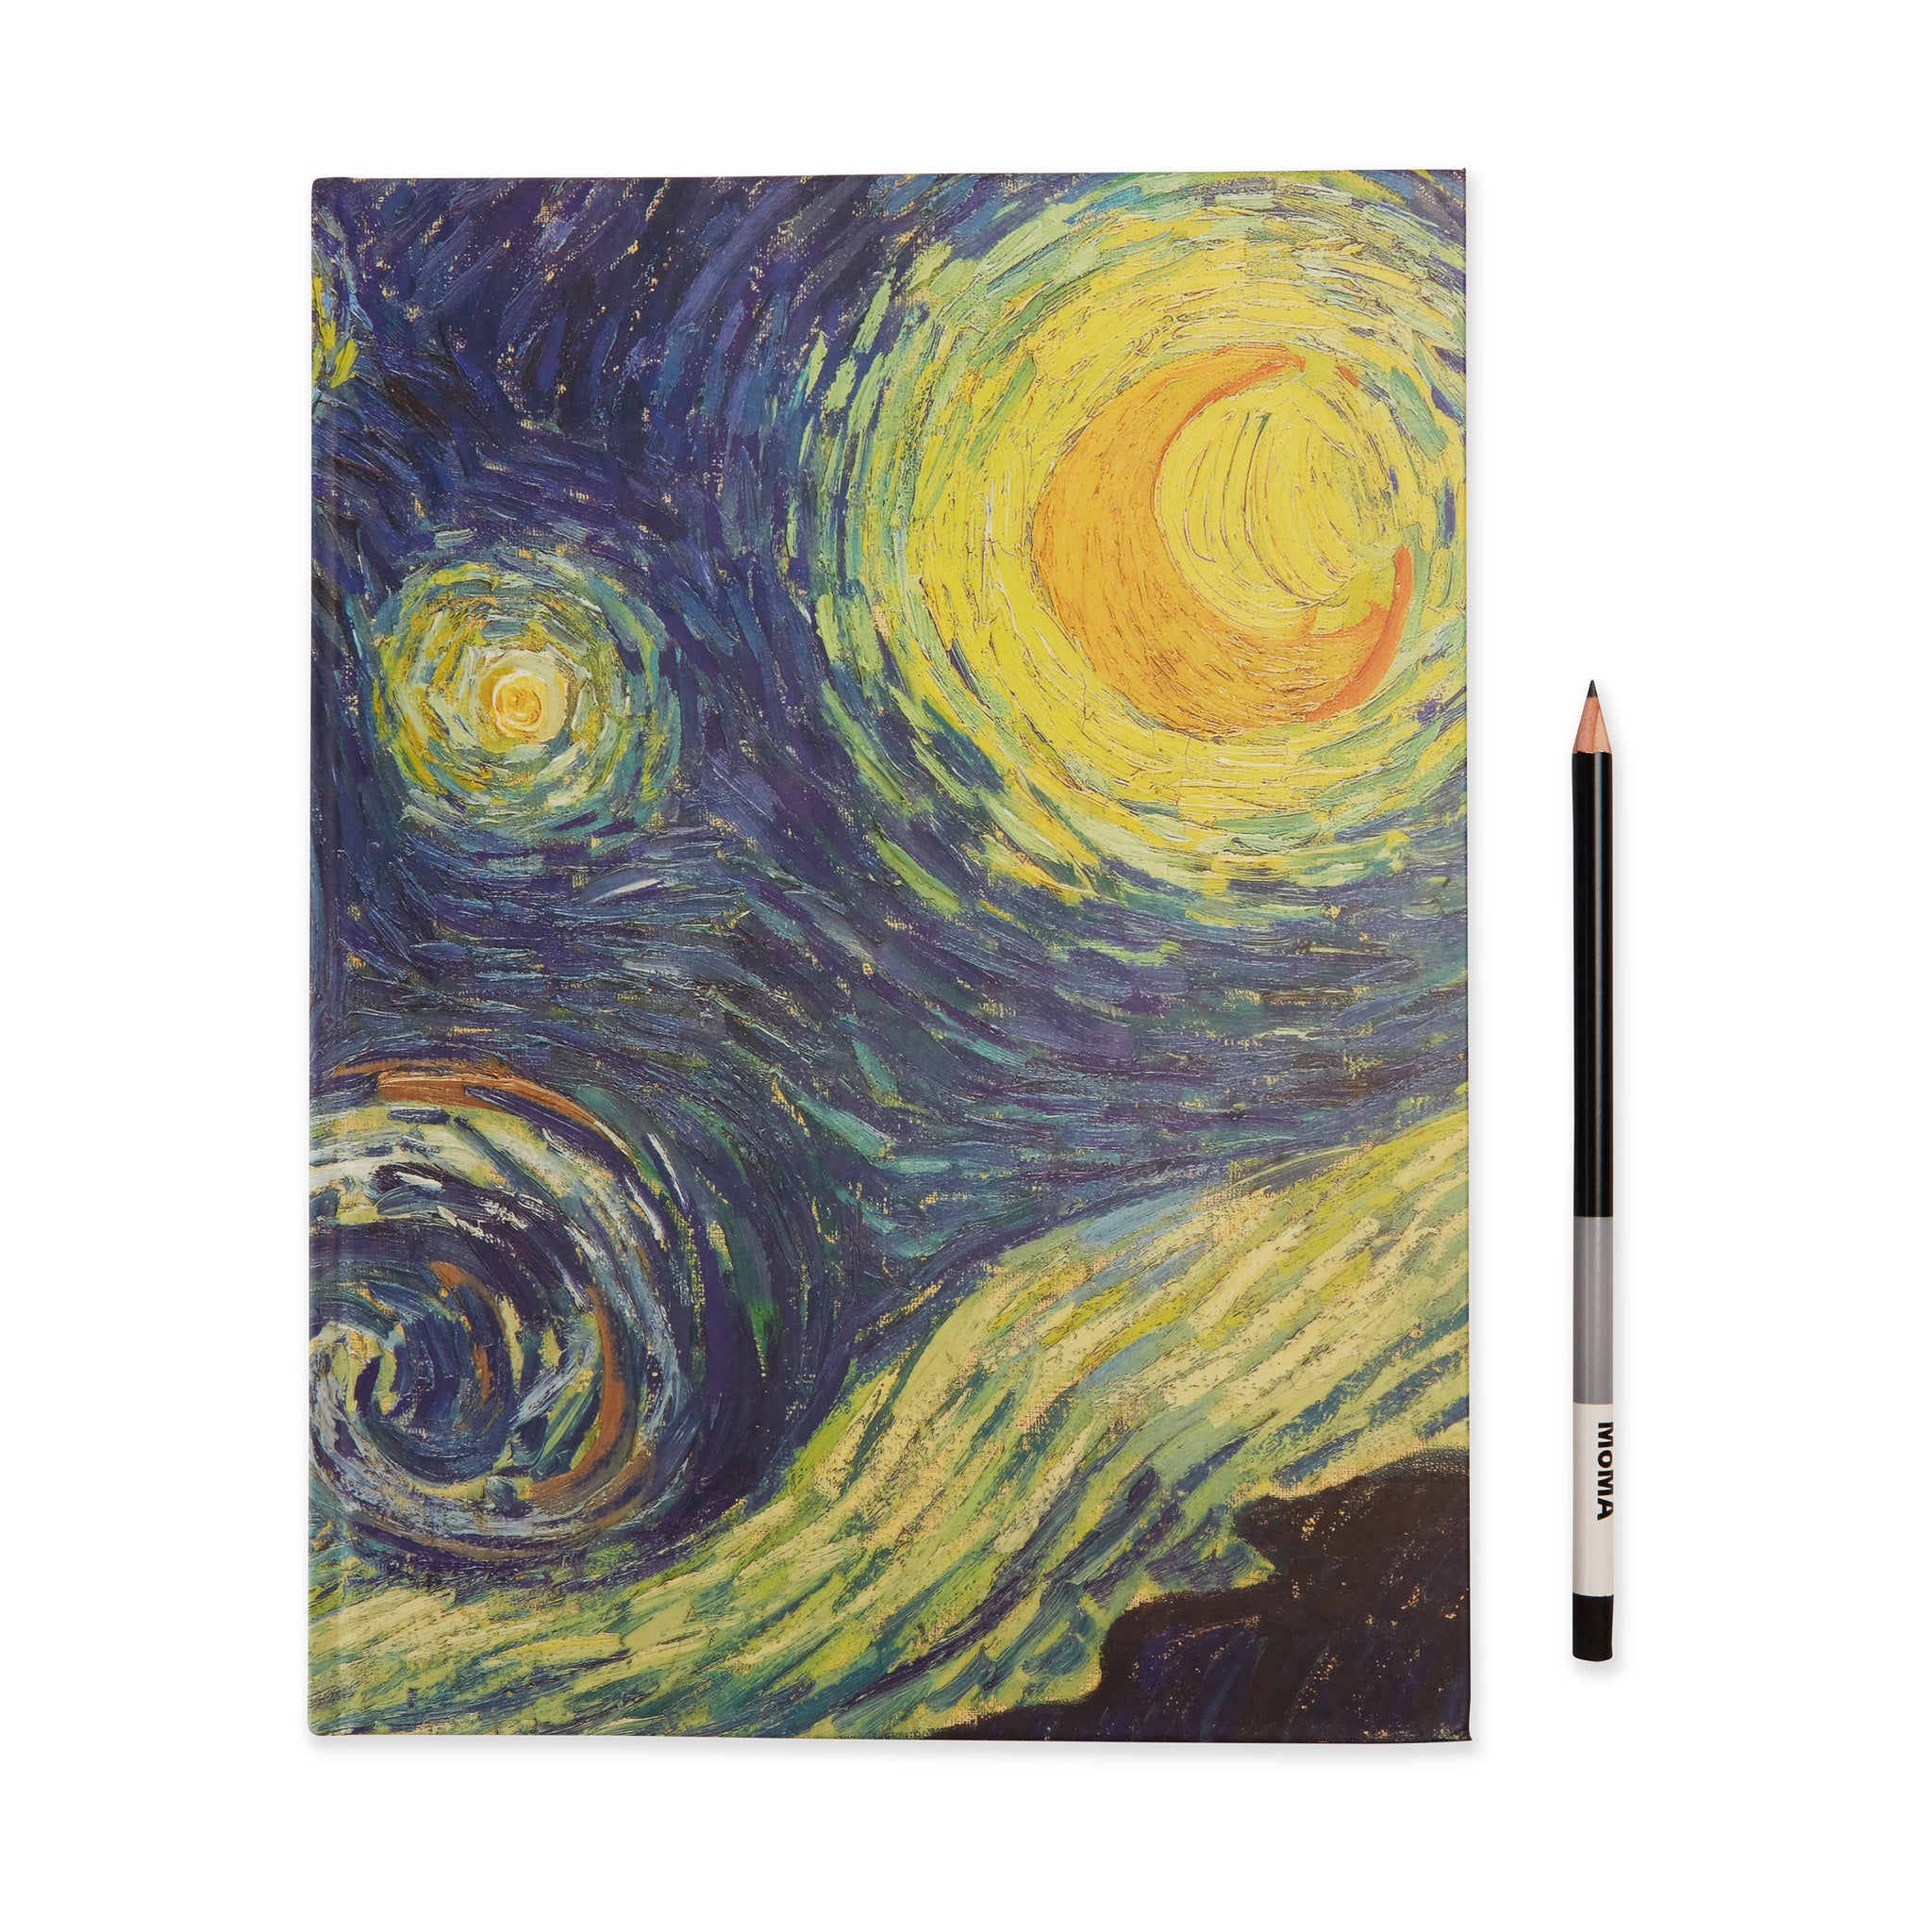 Starry night is an art block saviour, prove me wrong. Sketchbook